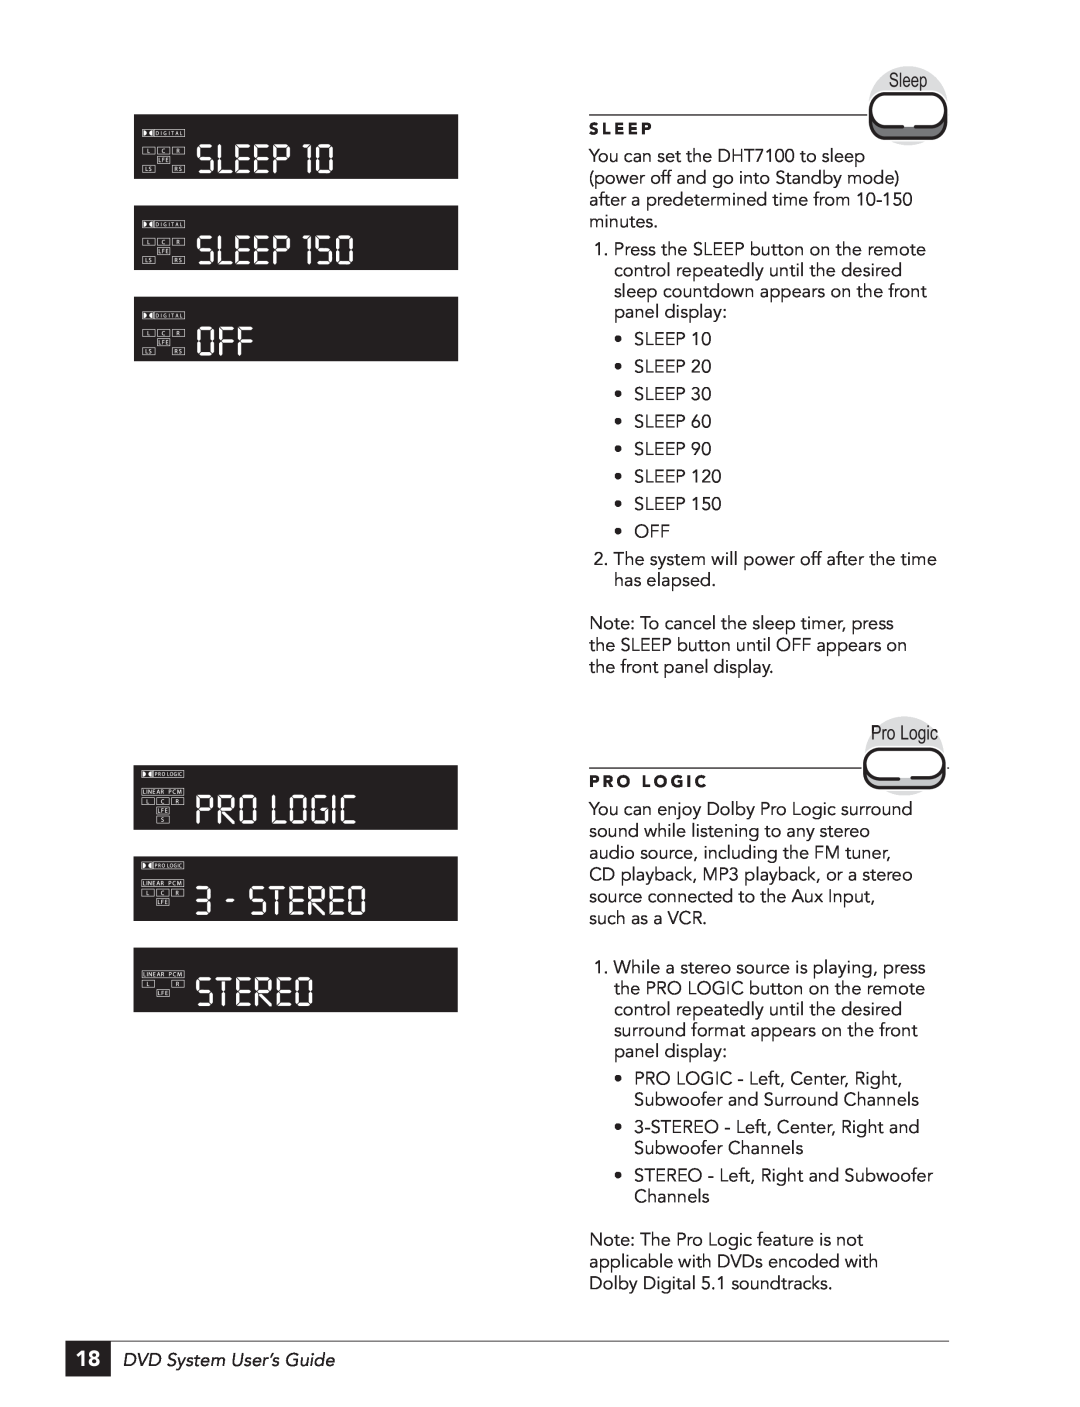 GoVideo DHT7100 manual SLEEP SLEEP OFF PRO LOGIC 3 - STEREO STEREO, Sleep, Pro Logic, DVD System User’s Guide 